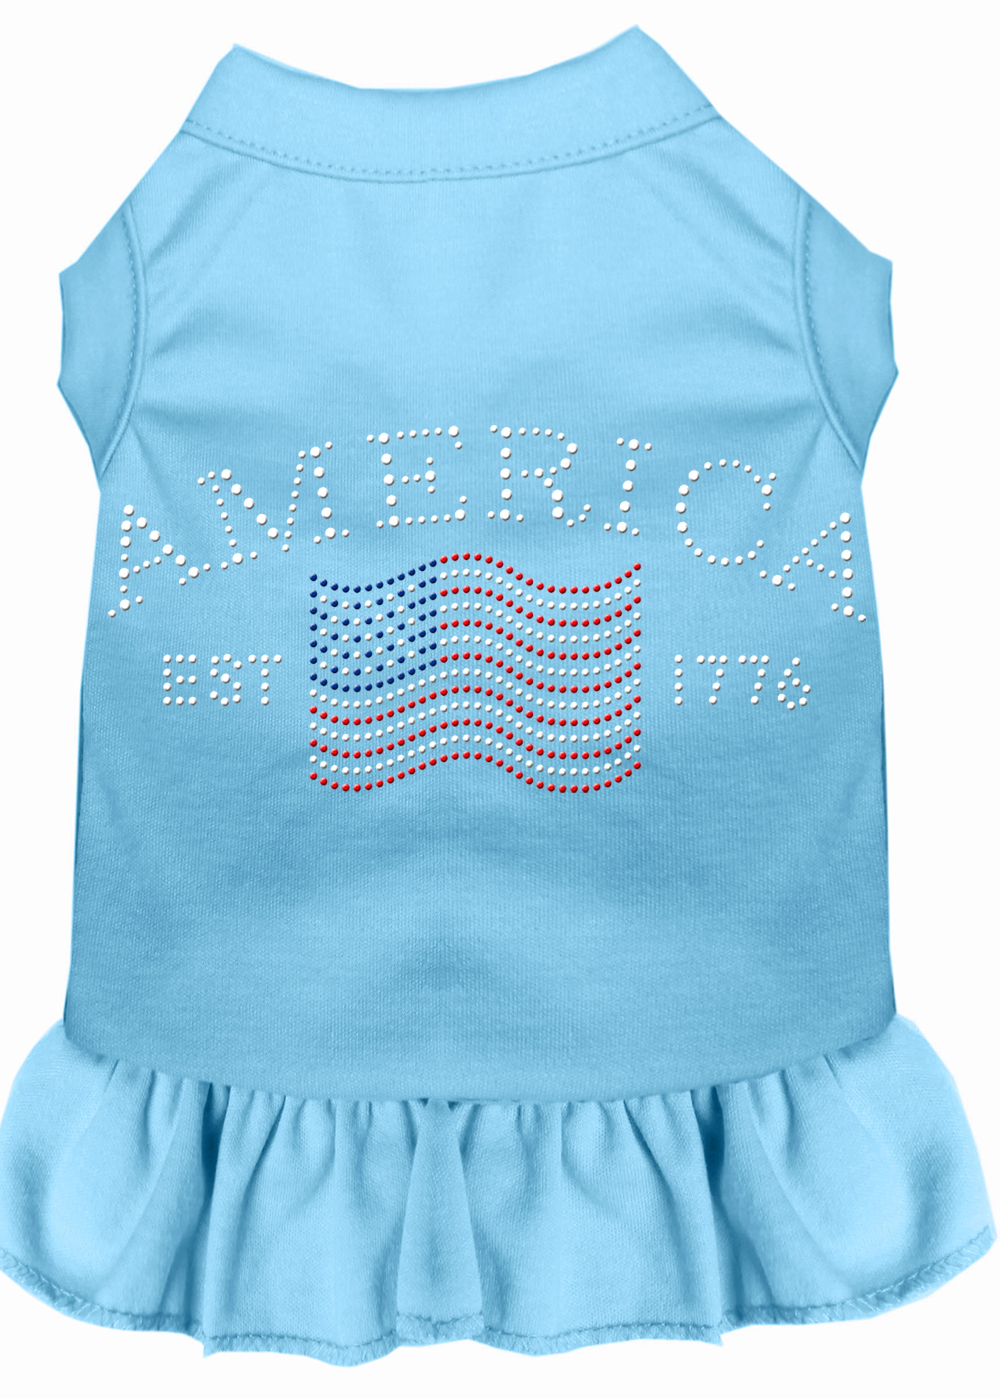 Classic America Rhinestone Dress Baby Blue XS